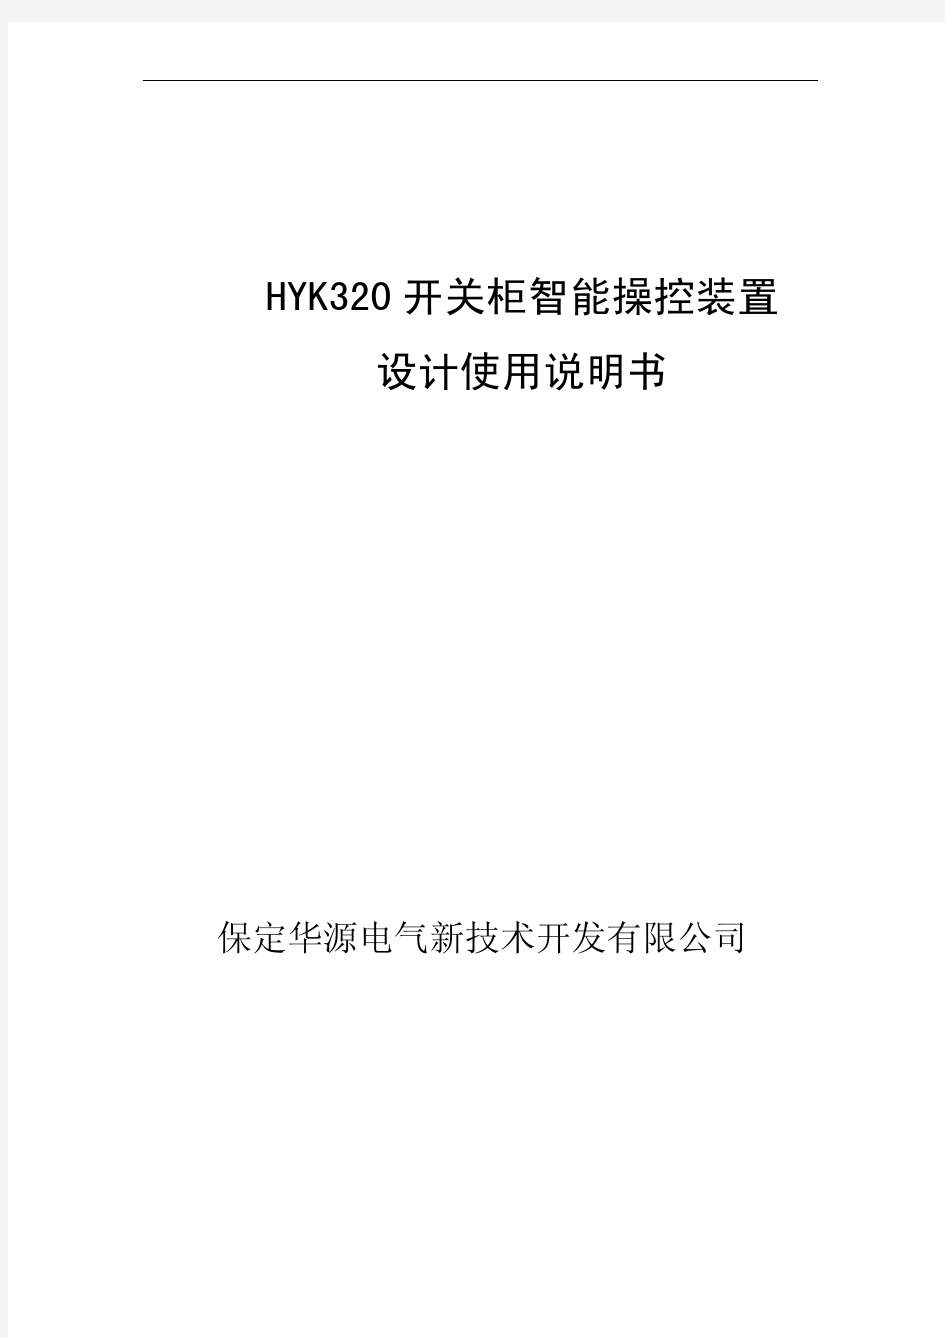 HYK320开关柜智能操控装置 设计使用说明书